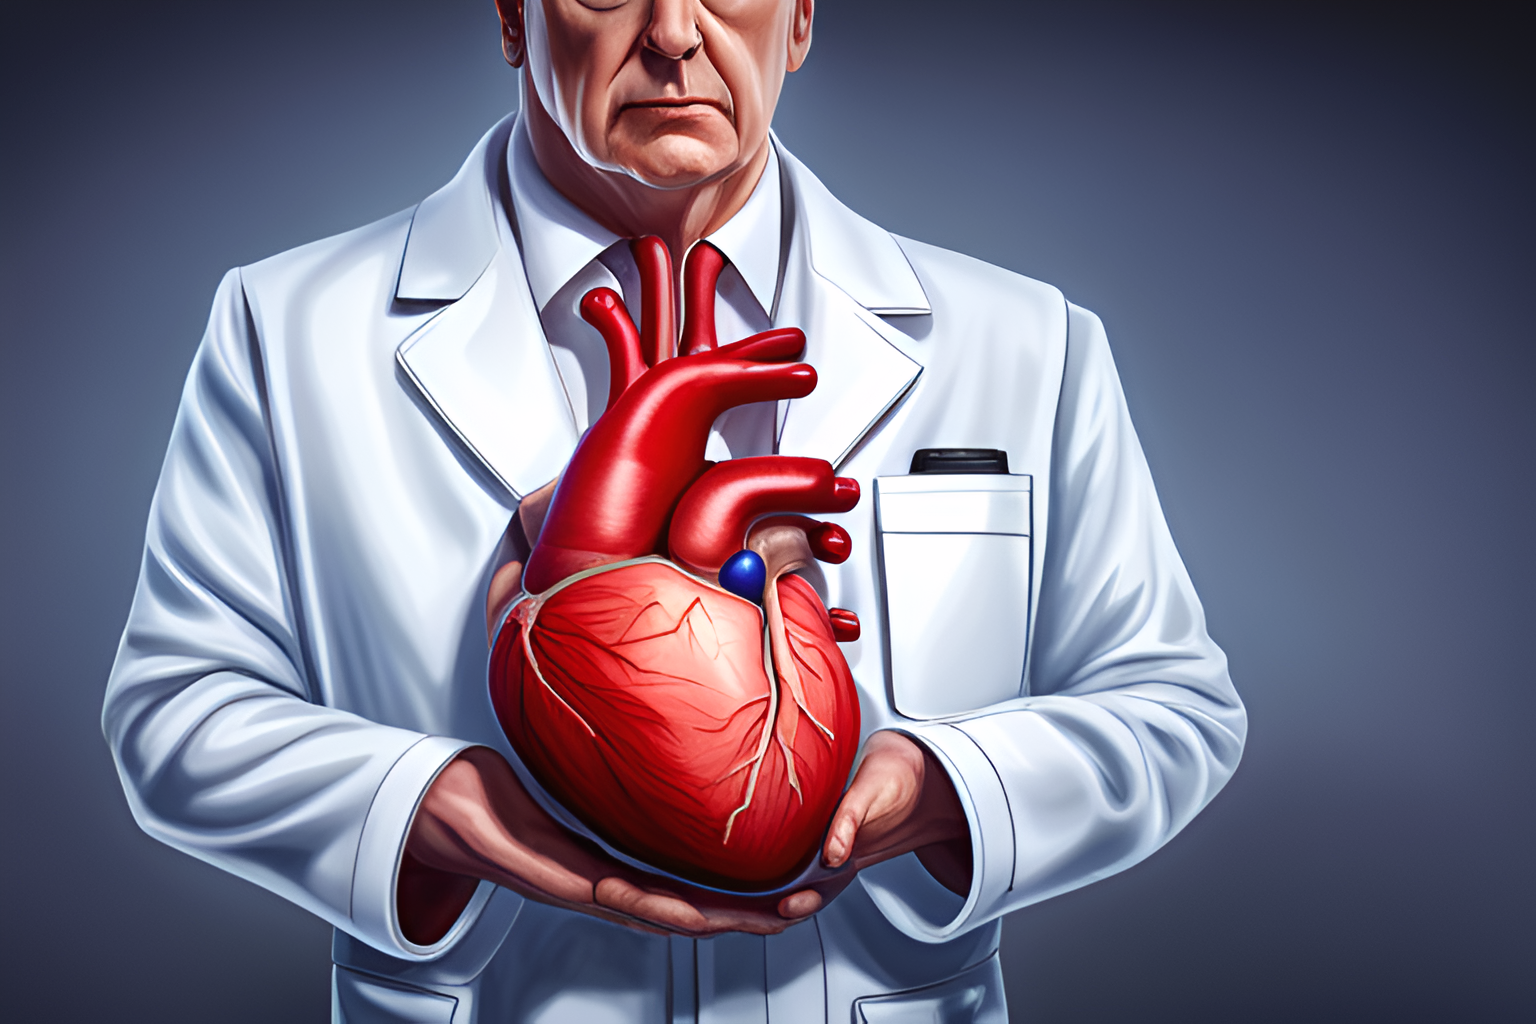 Human heart ready for transplant